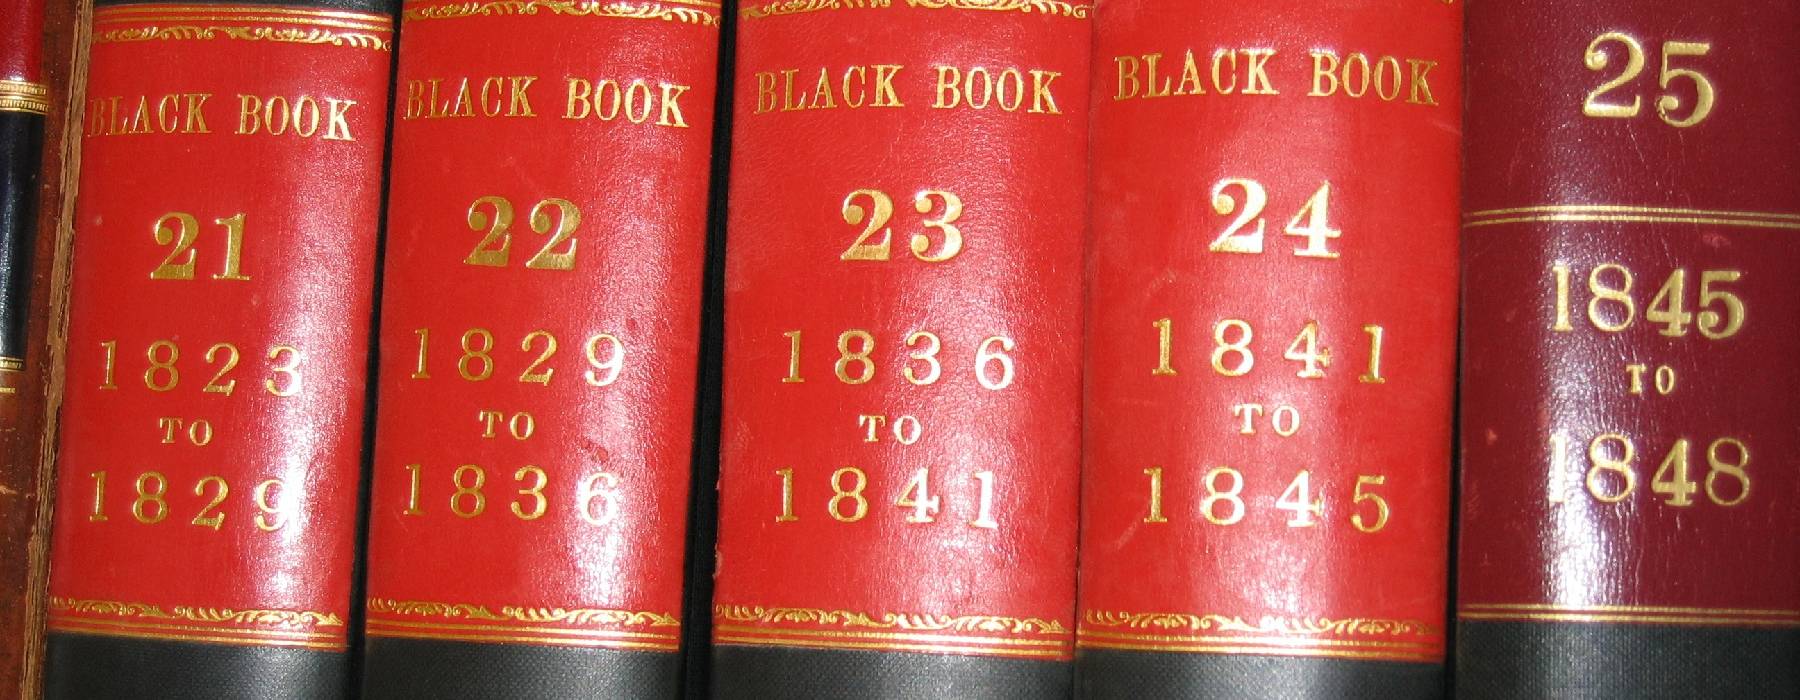 Black_Books 1800 x 1200